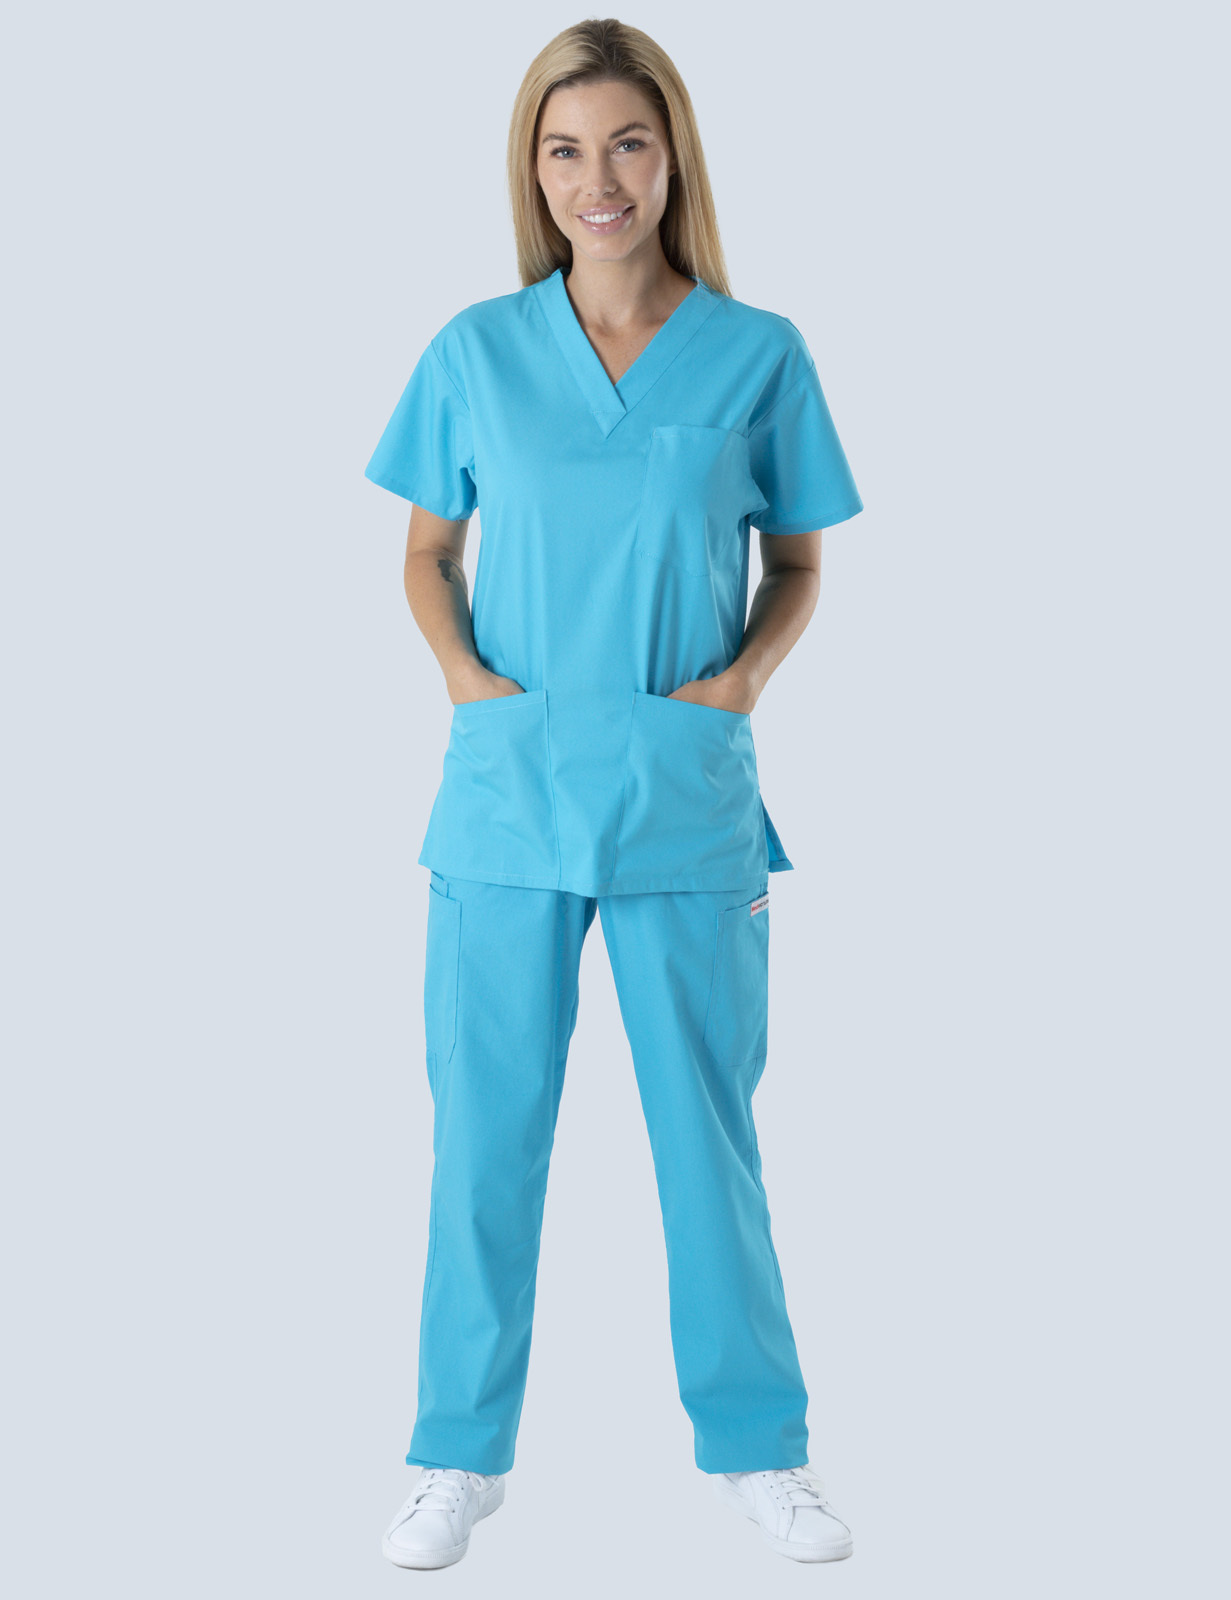 SCPU Hospital - Enrolled Nurse (4 Pocket Scrub Top and Cargo Pants in Aqua incl Logos)